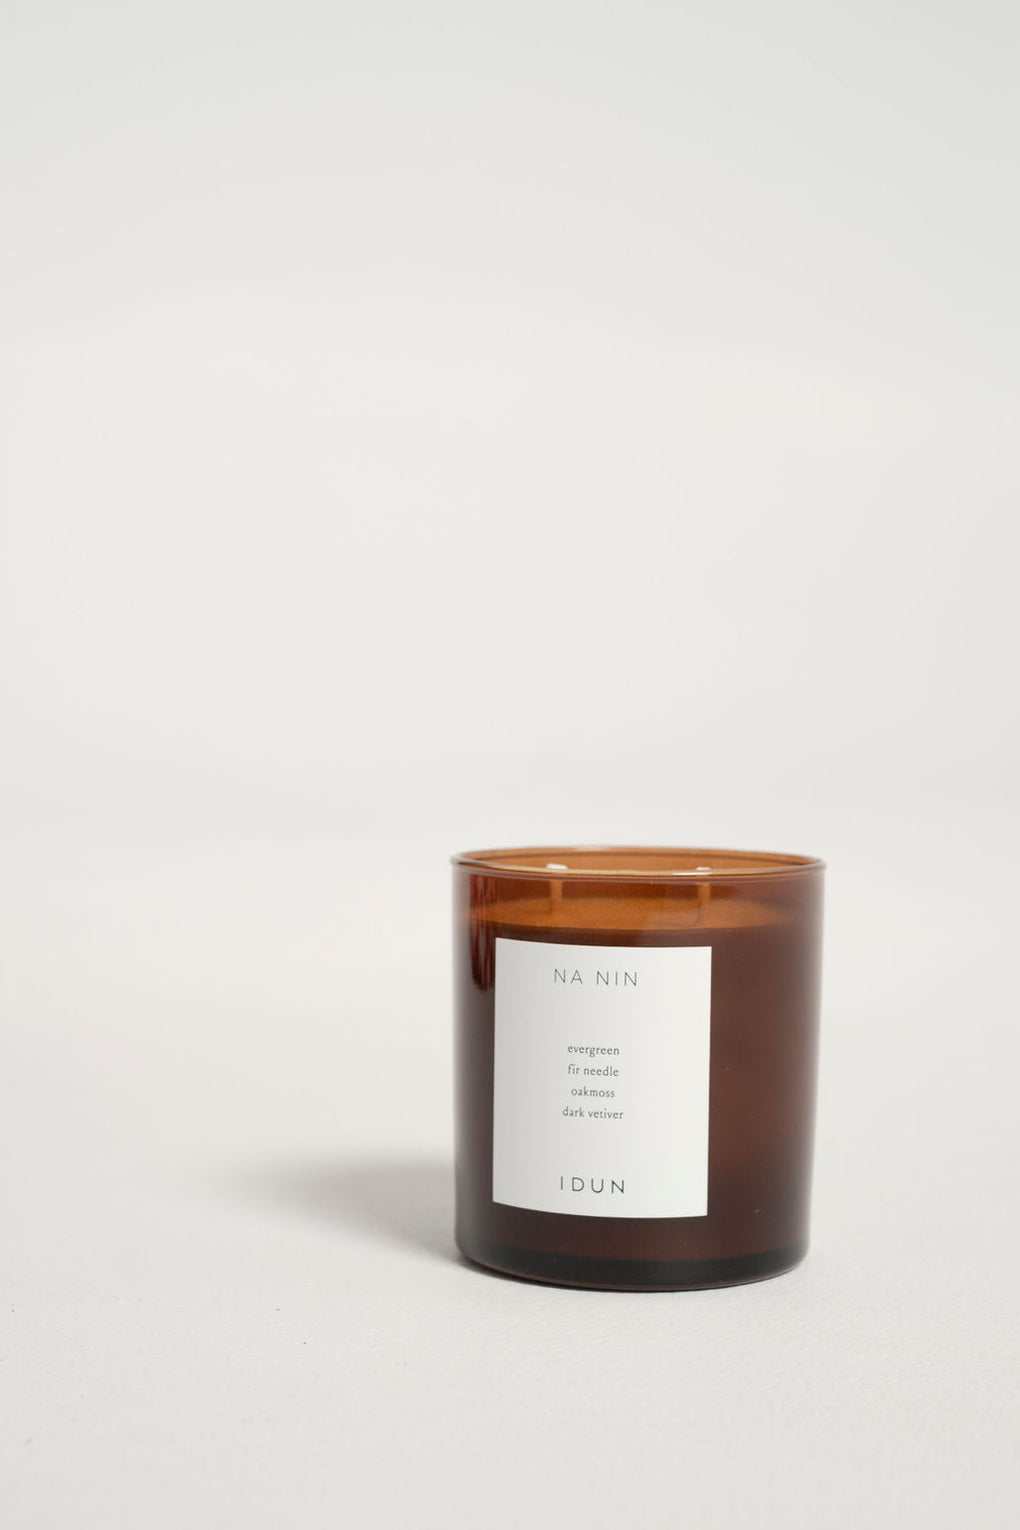 Na Nin-Norwegian candle-Idun candle-evergreen candle-fir needle candle-oakmoss candle-dark vetiver candle-Idun-St. Paul